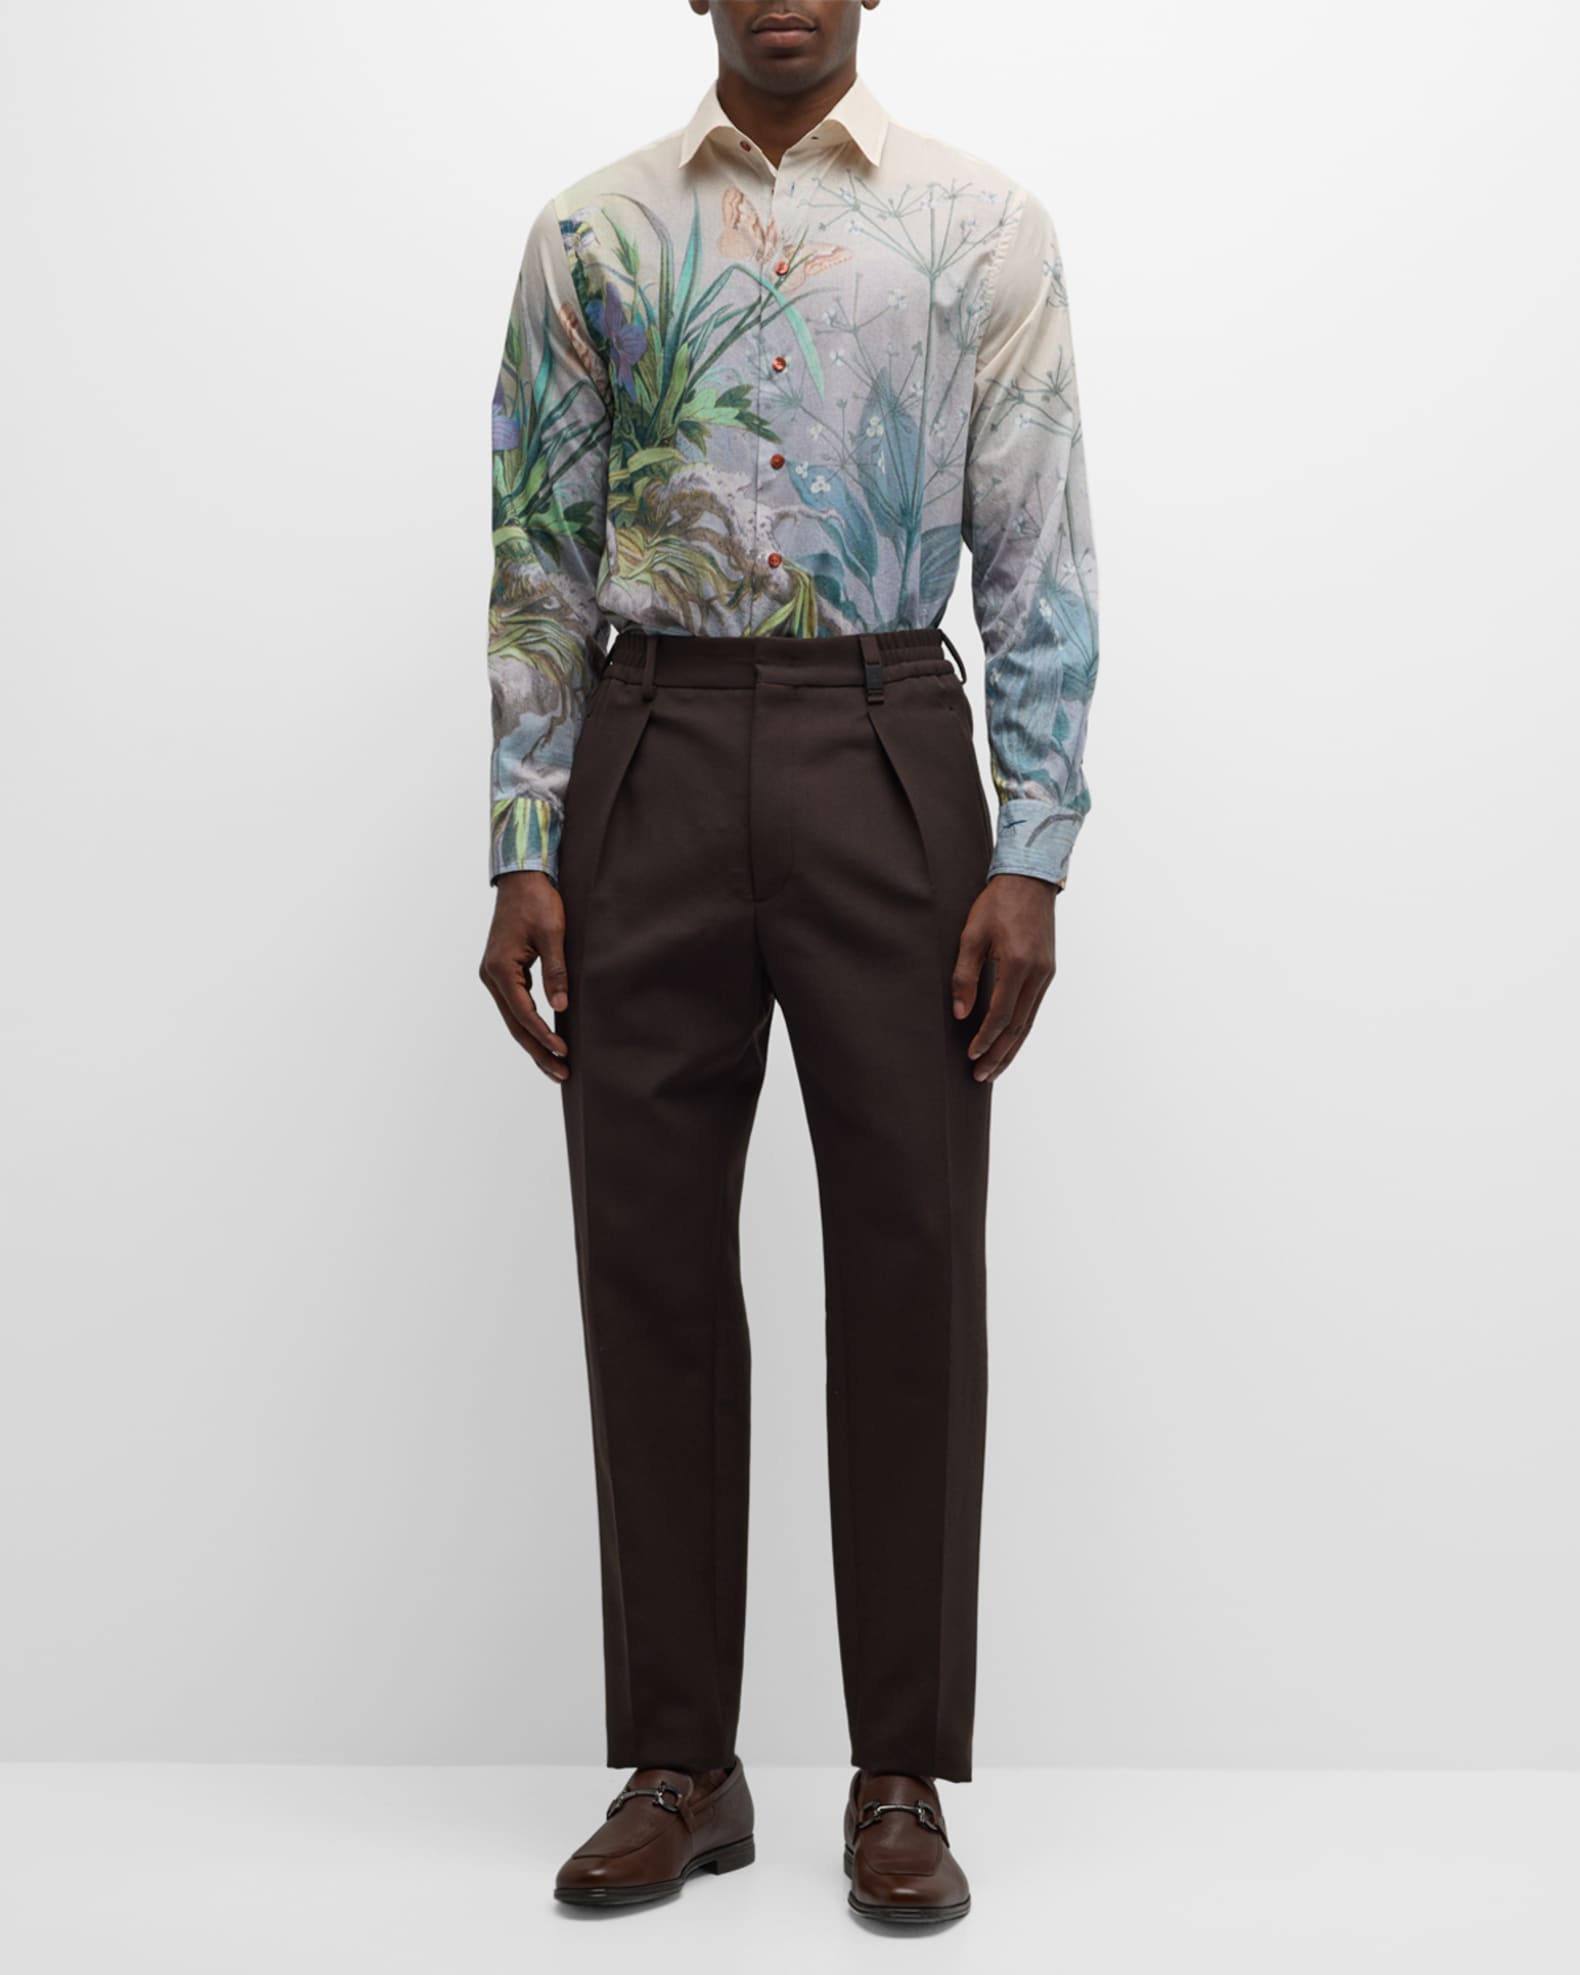 Gucci Men's Floral Shirt